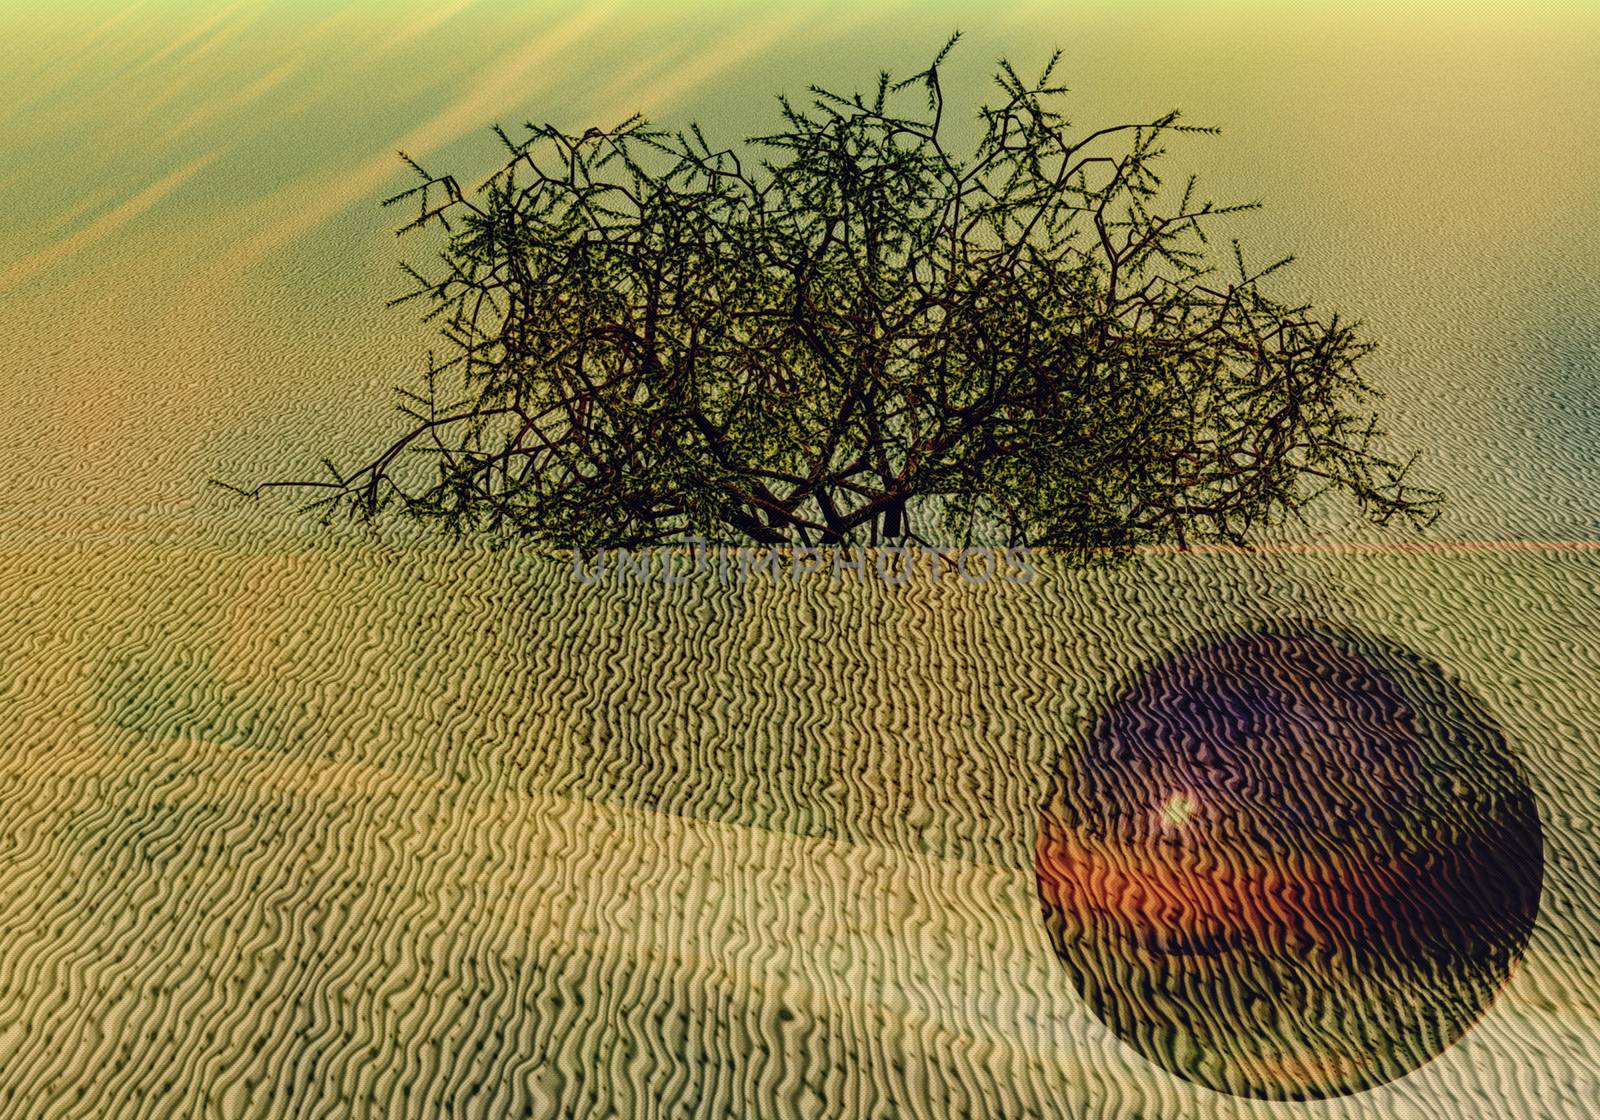 Unknown ball in the desert by creativ000creativ